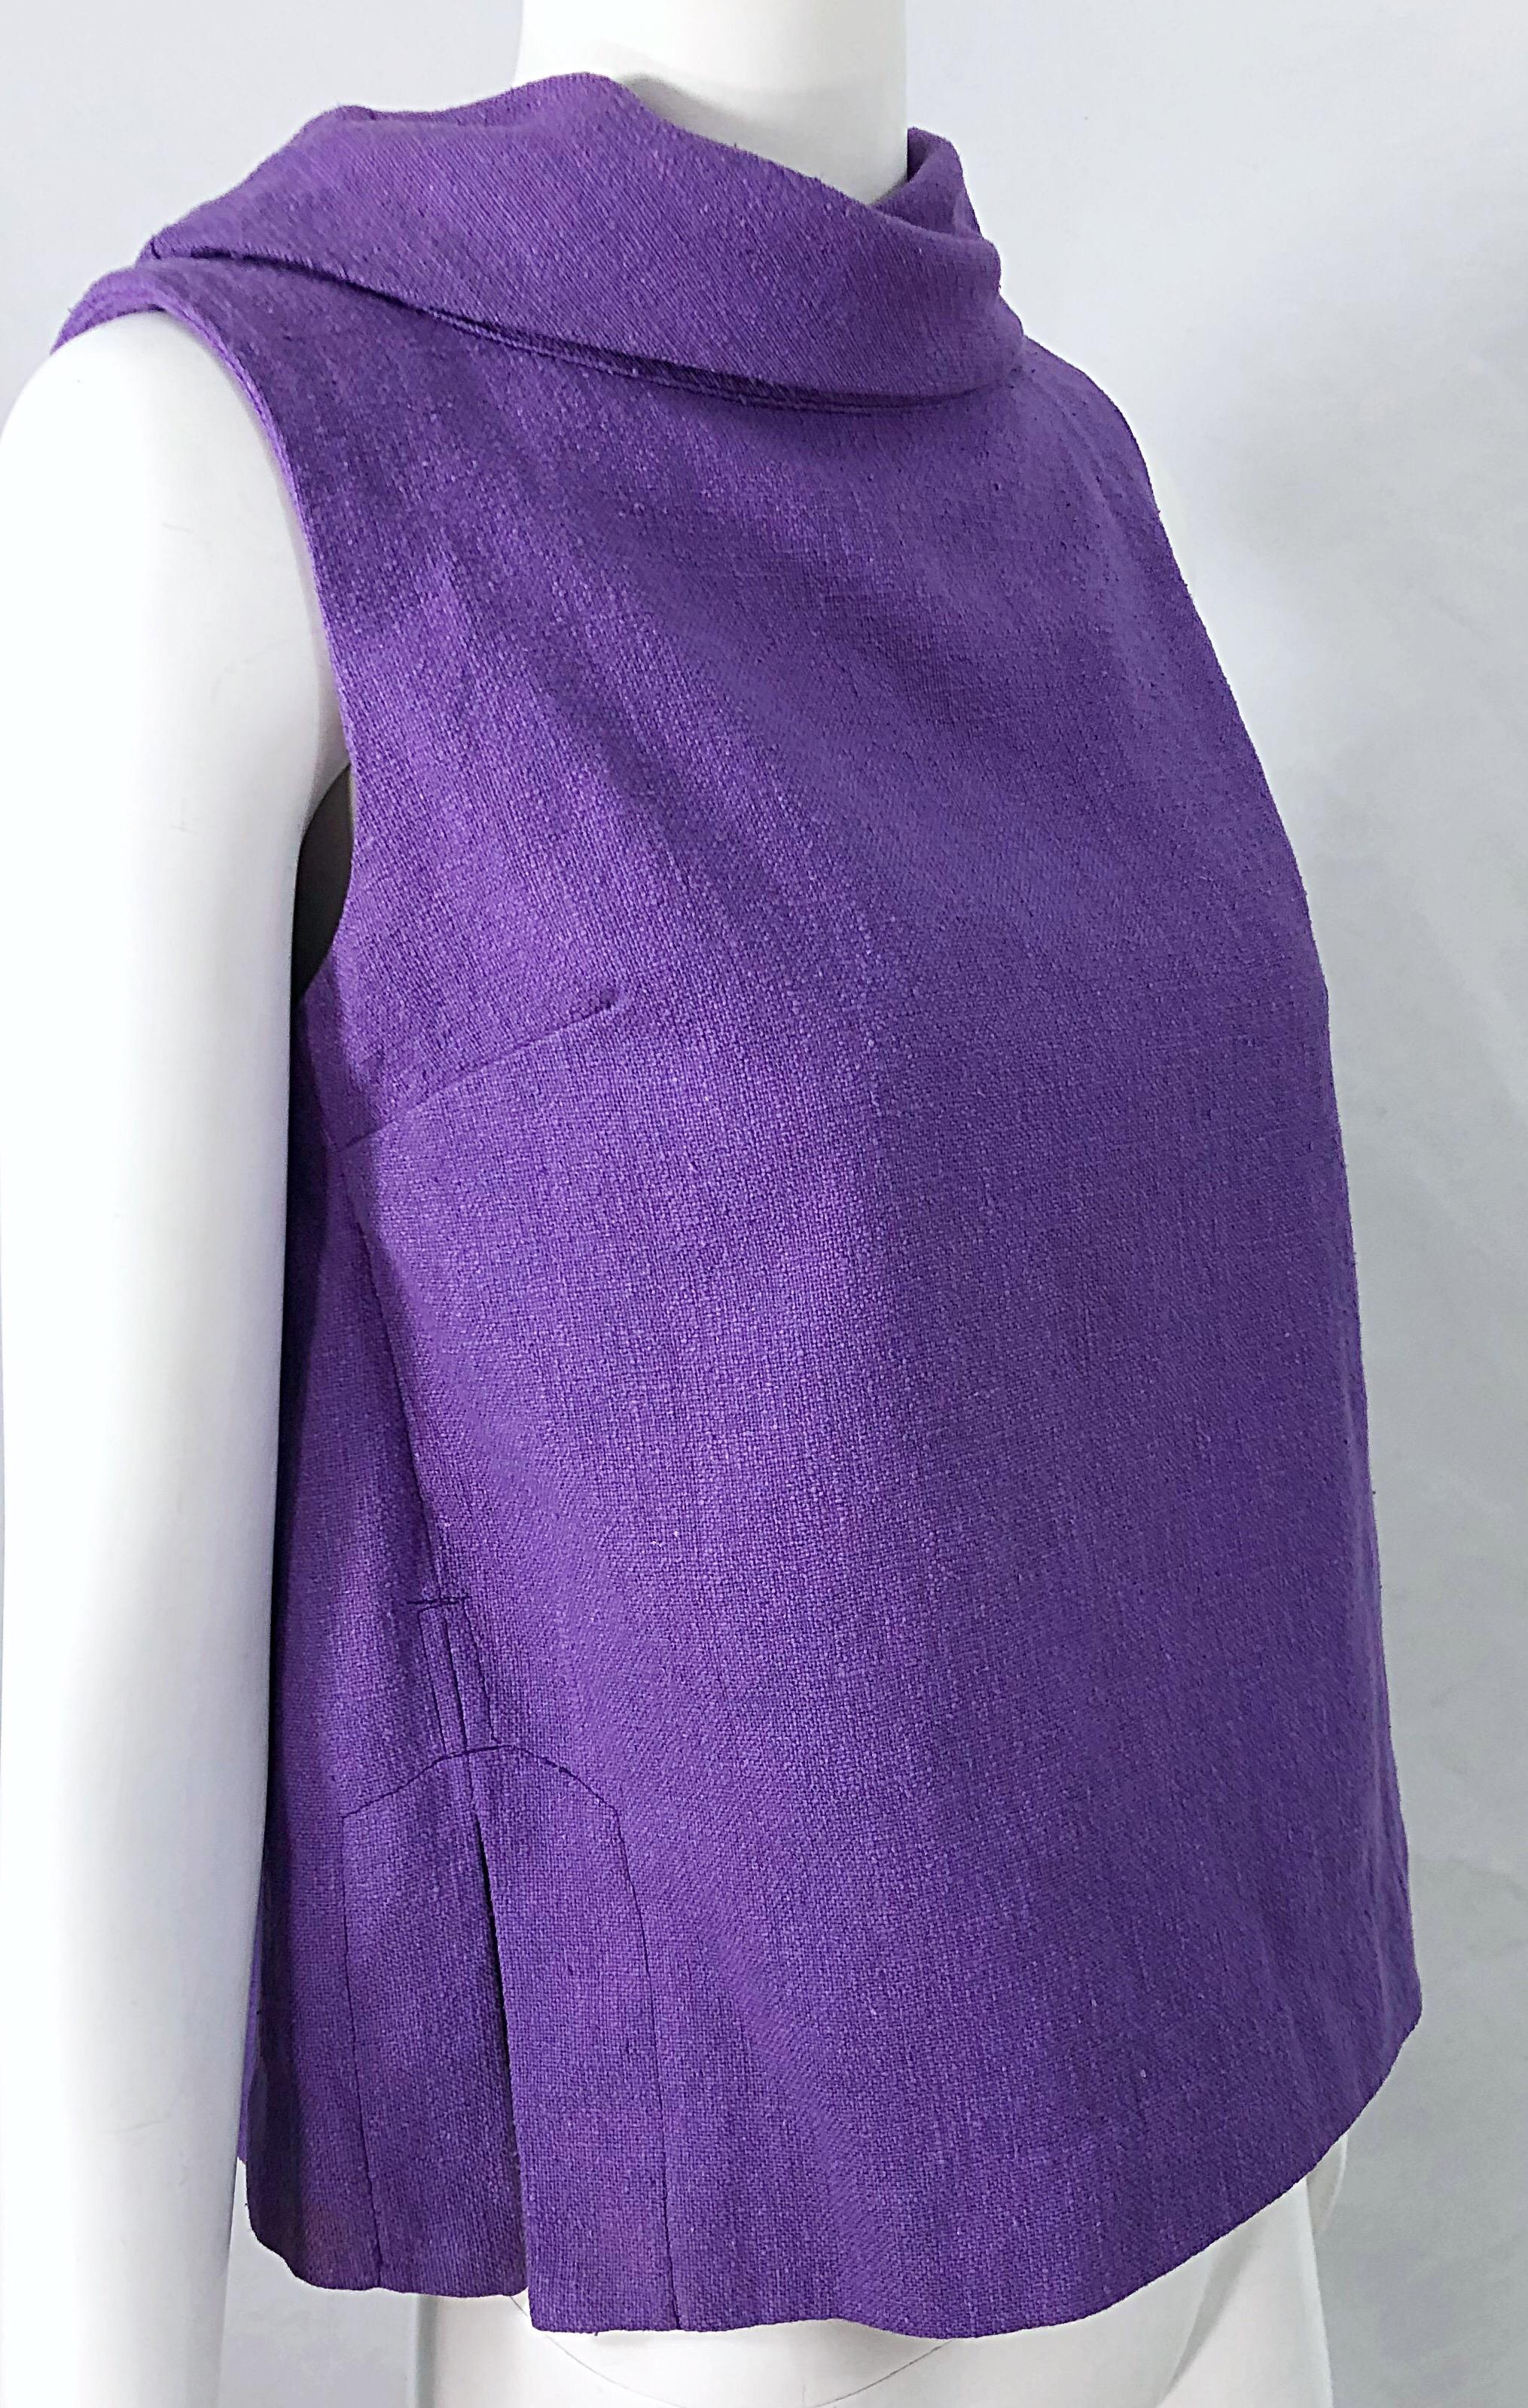 Chic 1960s Purple Linen Empire Waist Vintage 60s A Line Sleeveless Top Shirt For Sale 2